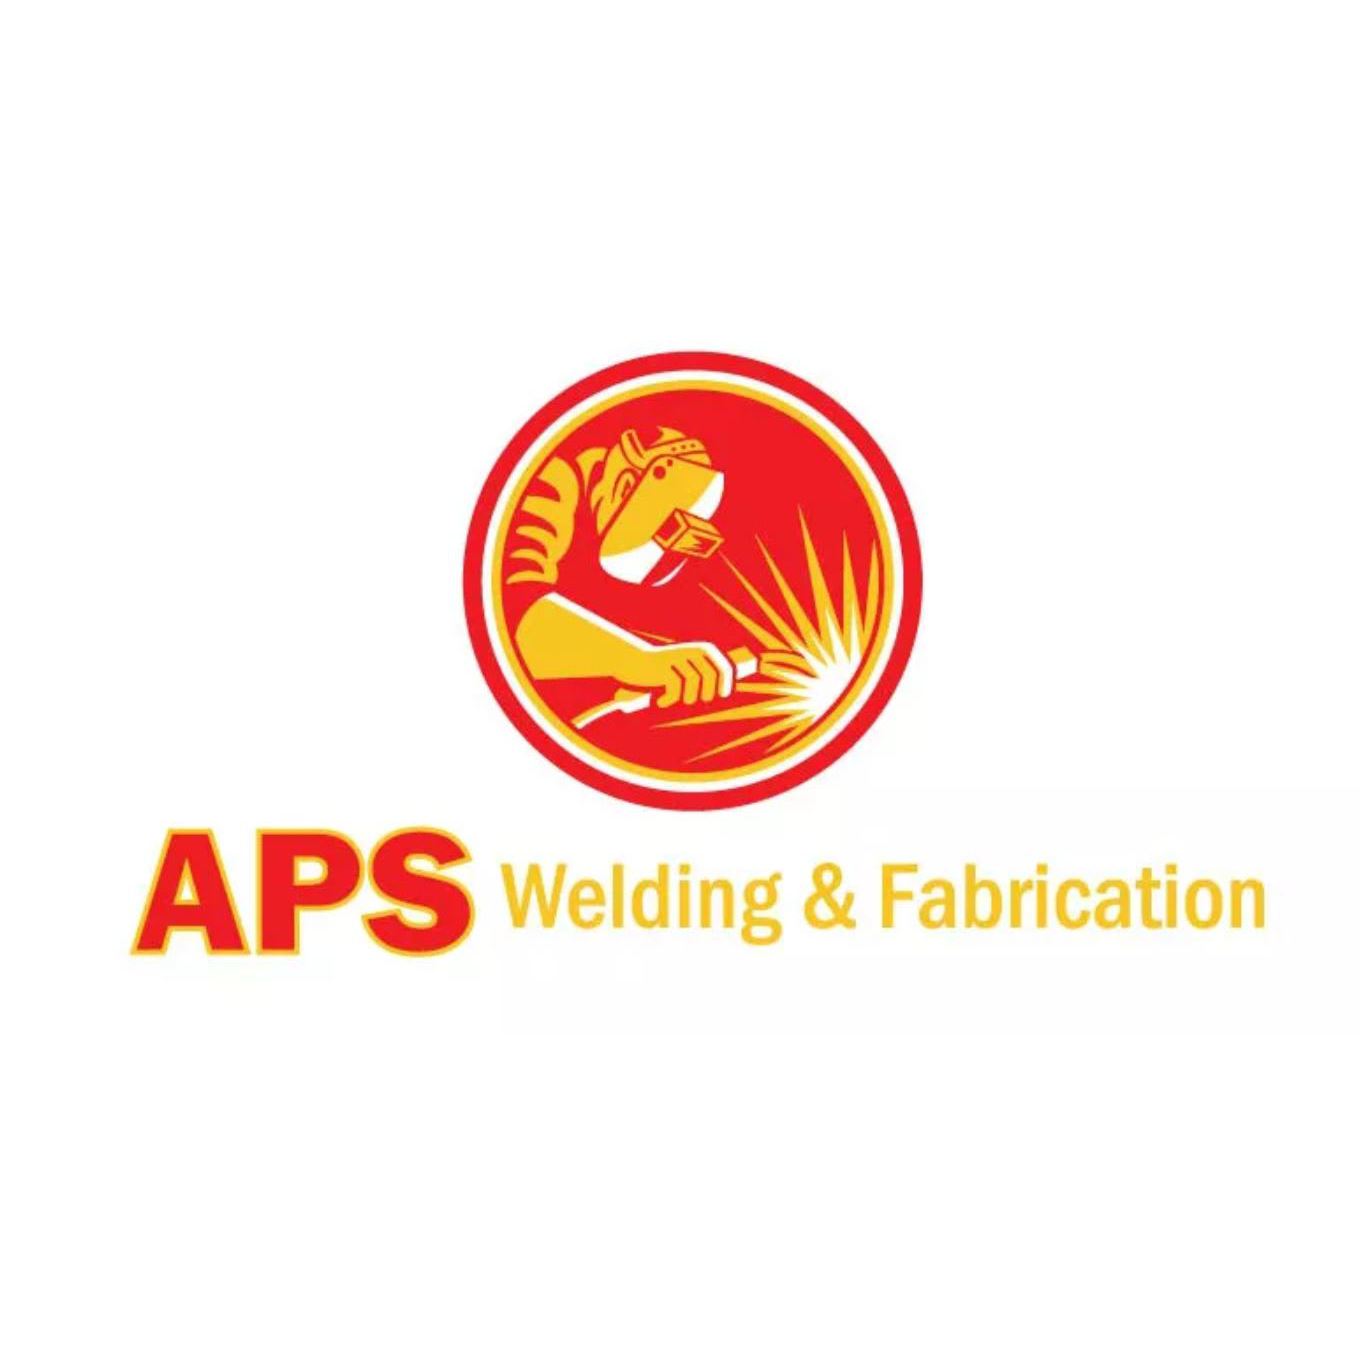 LOGO A.P.S Welding & Fabrication Services Ltd Southampton 02380 866008